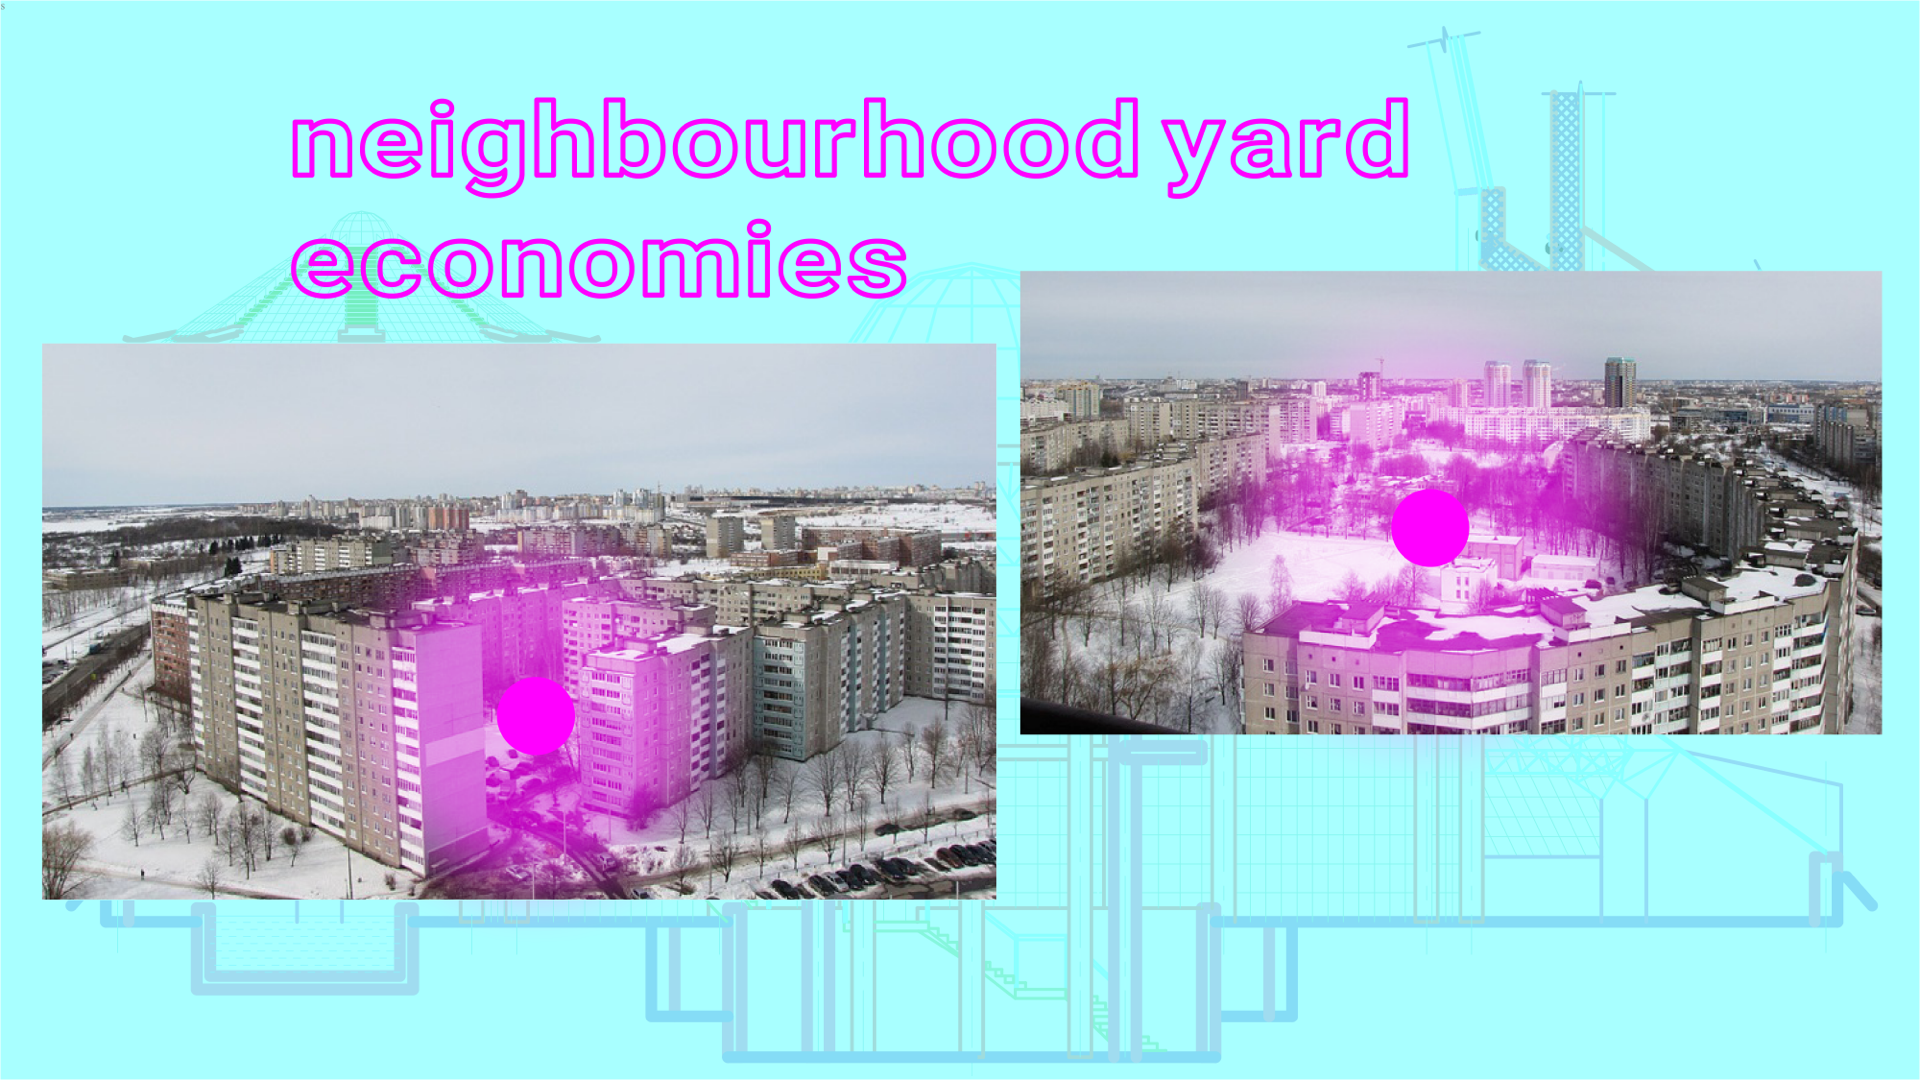 heighbourhood yards economies